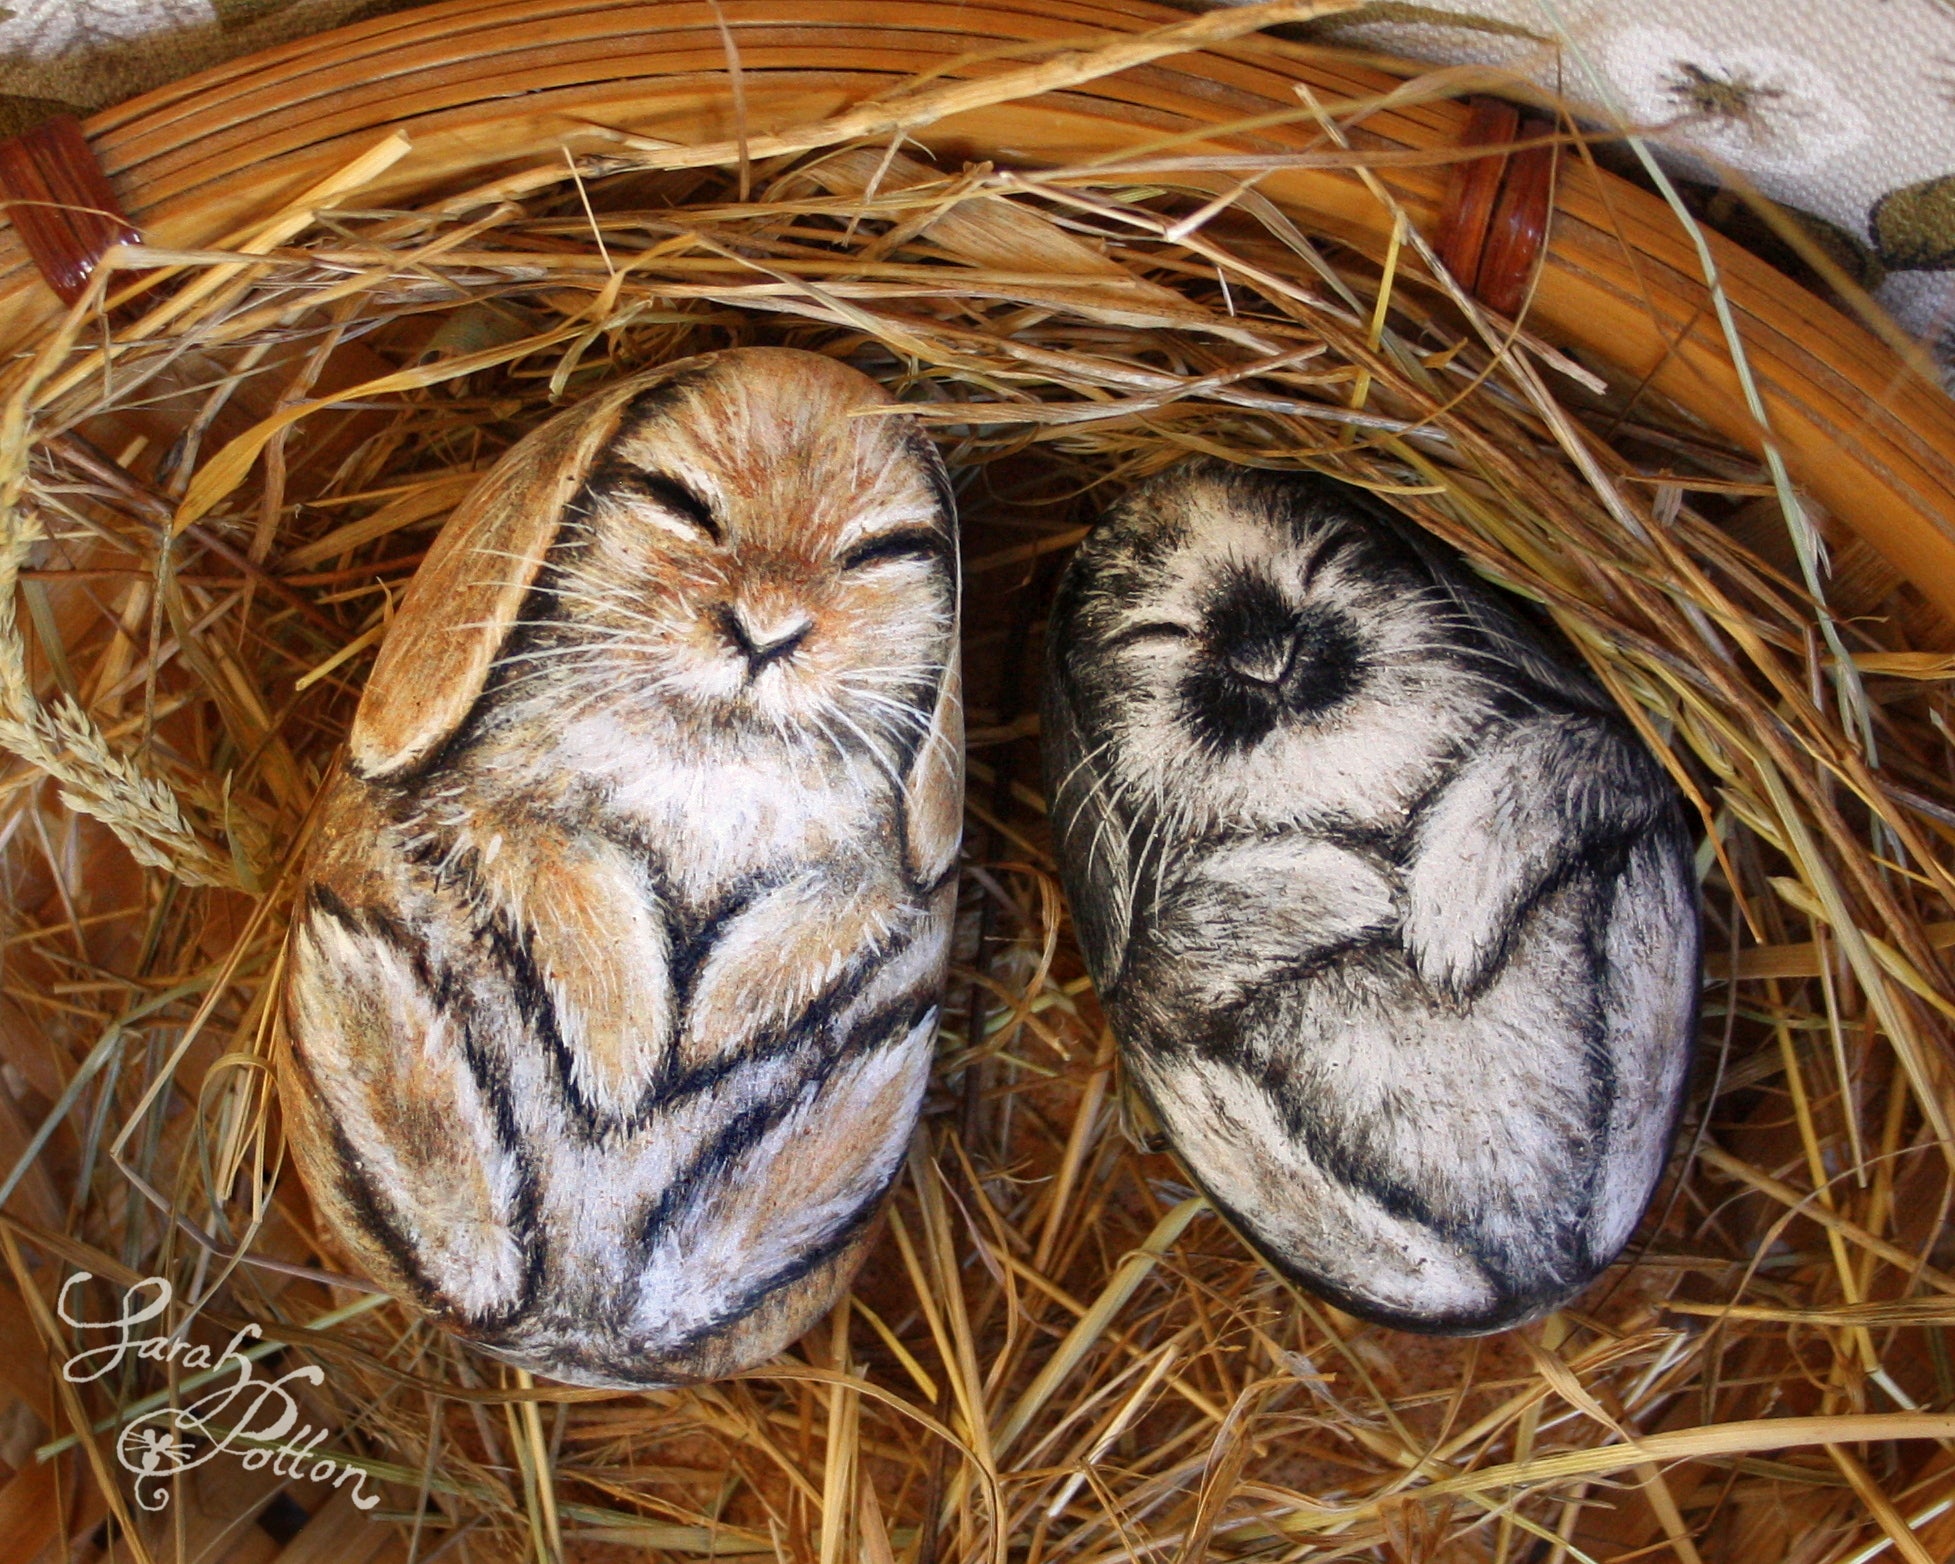 painted rocks of sleeping rabbits - bunny ornaments